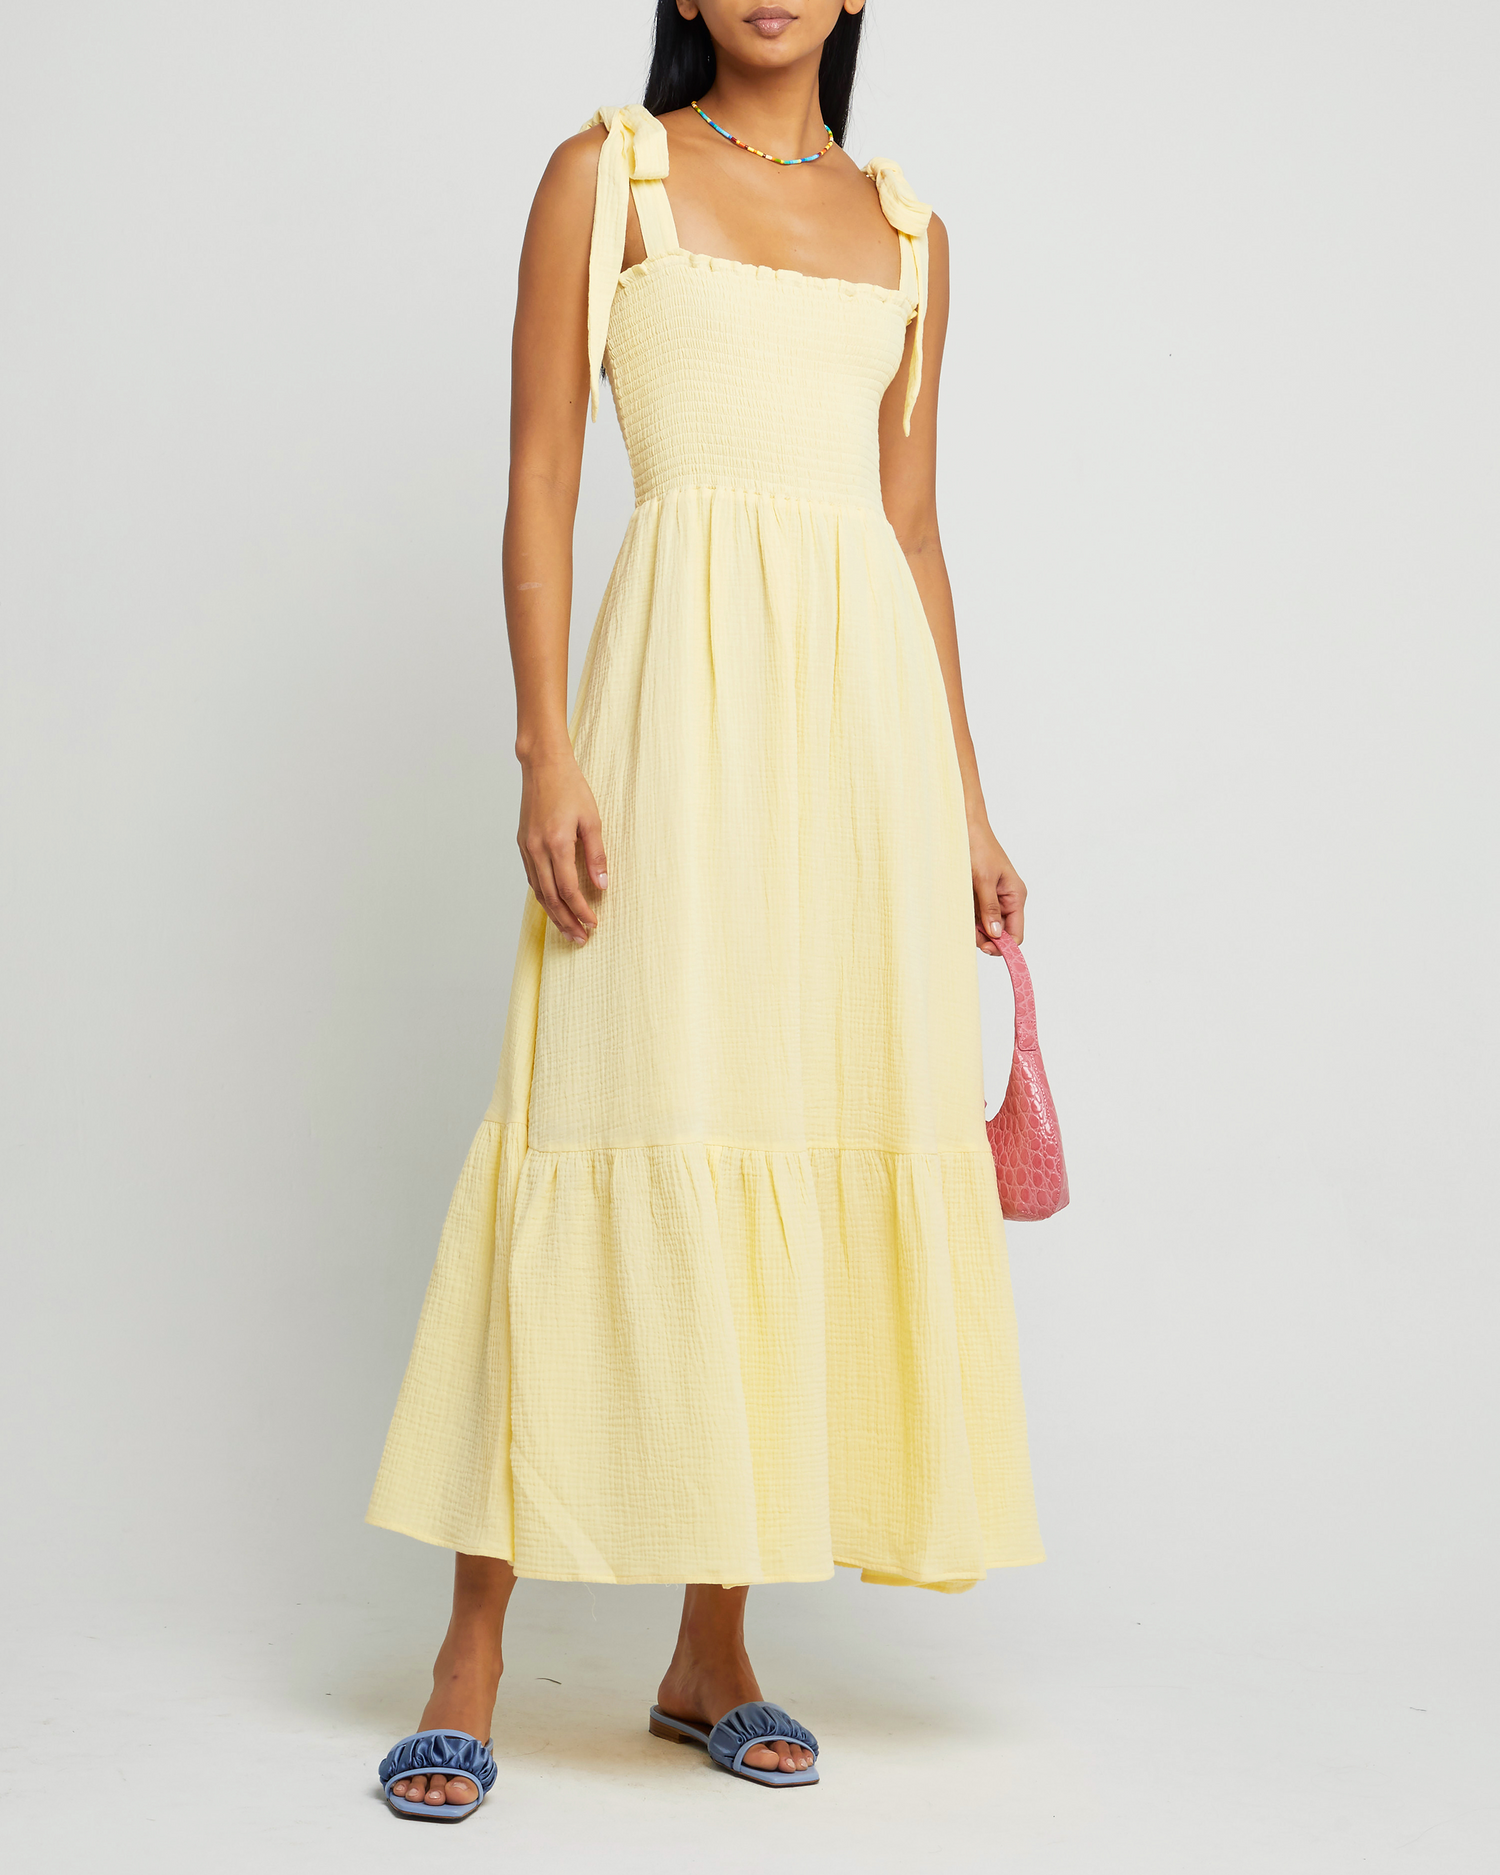 First image of Cotton Winnie Dress, a yellow maxi dress, tie straps, smocked bodice